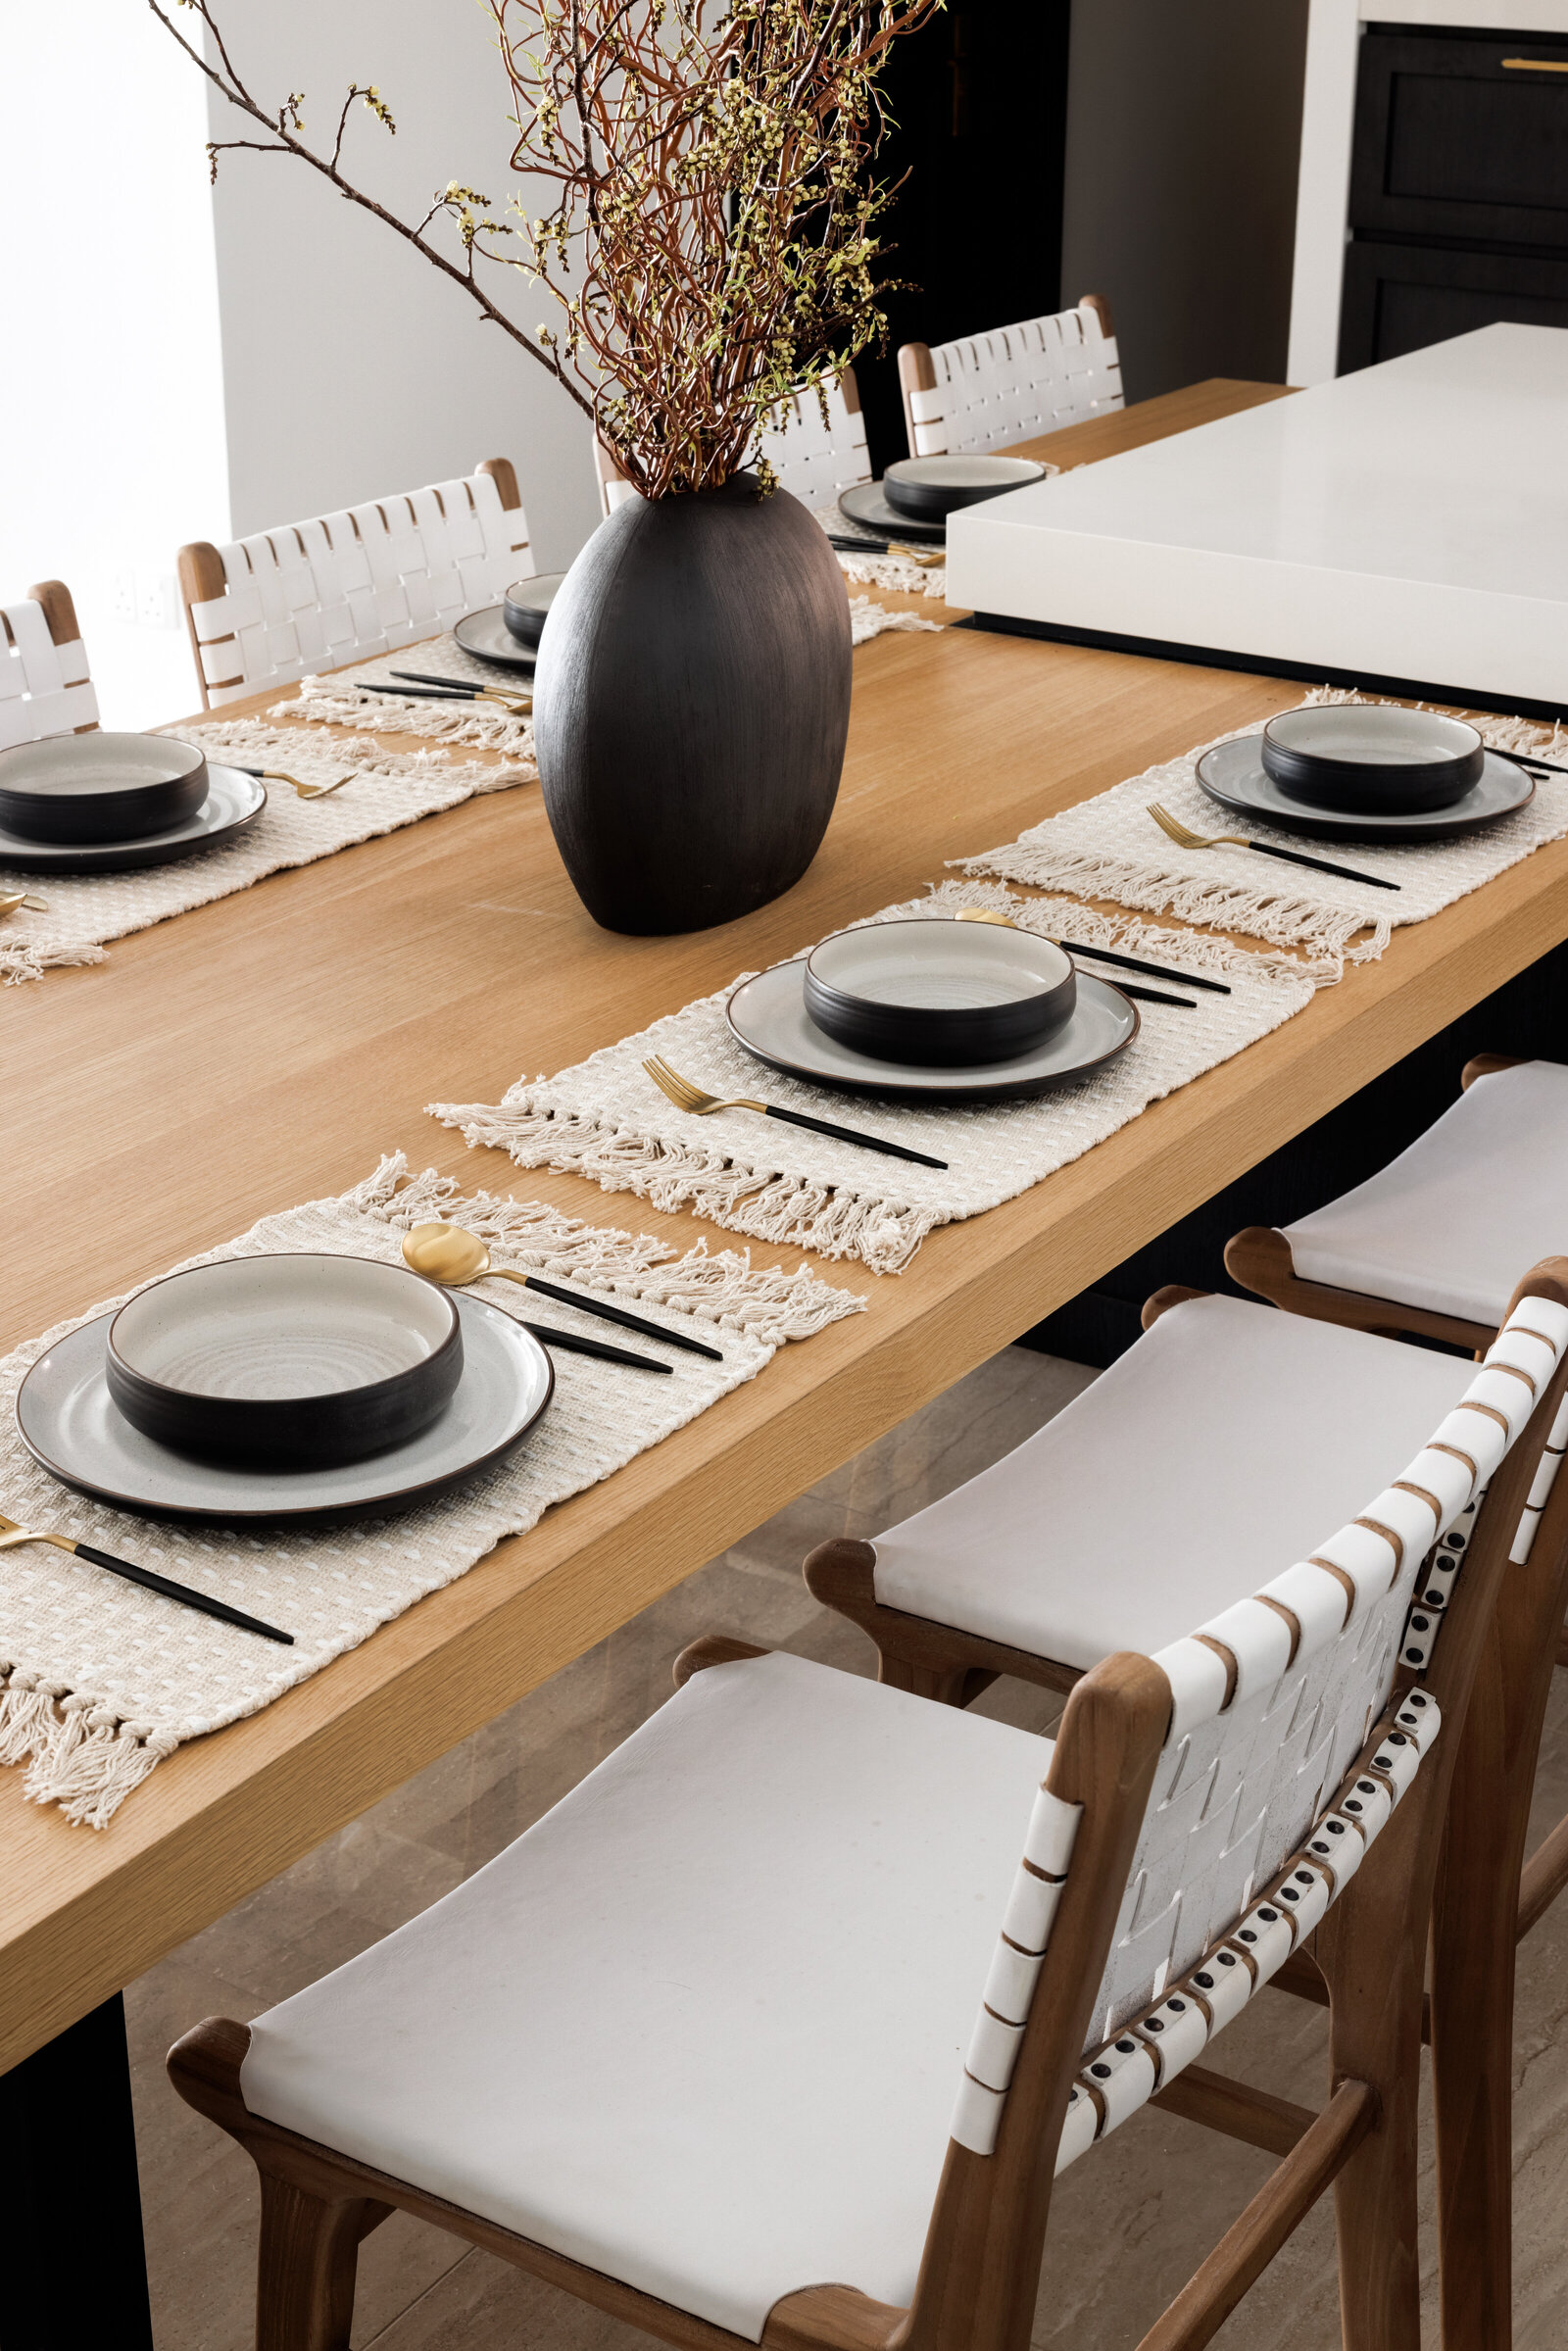 black & white kitchen design with stools